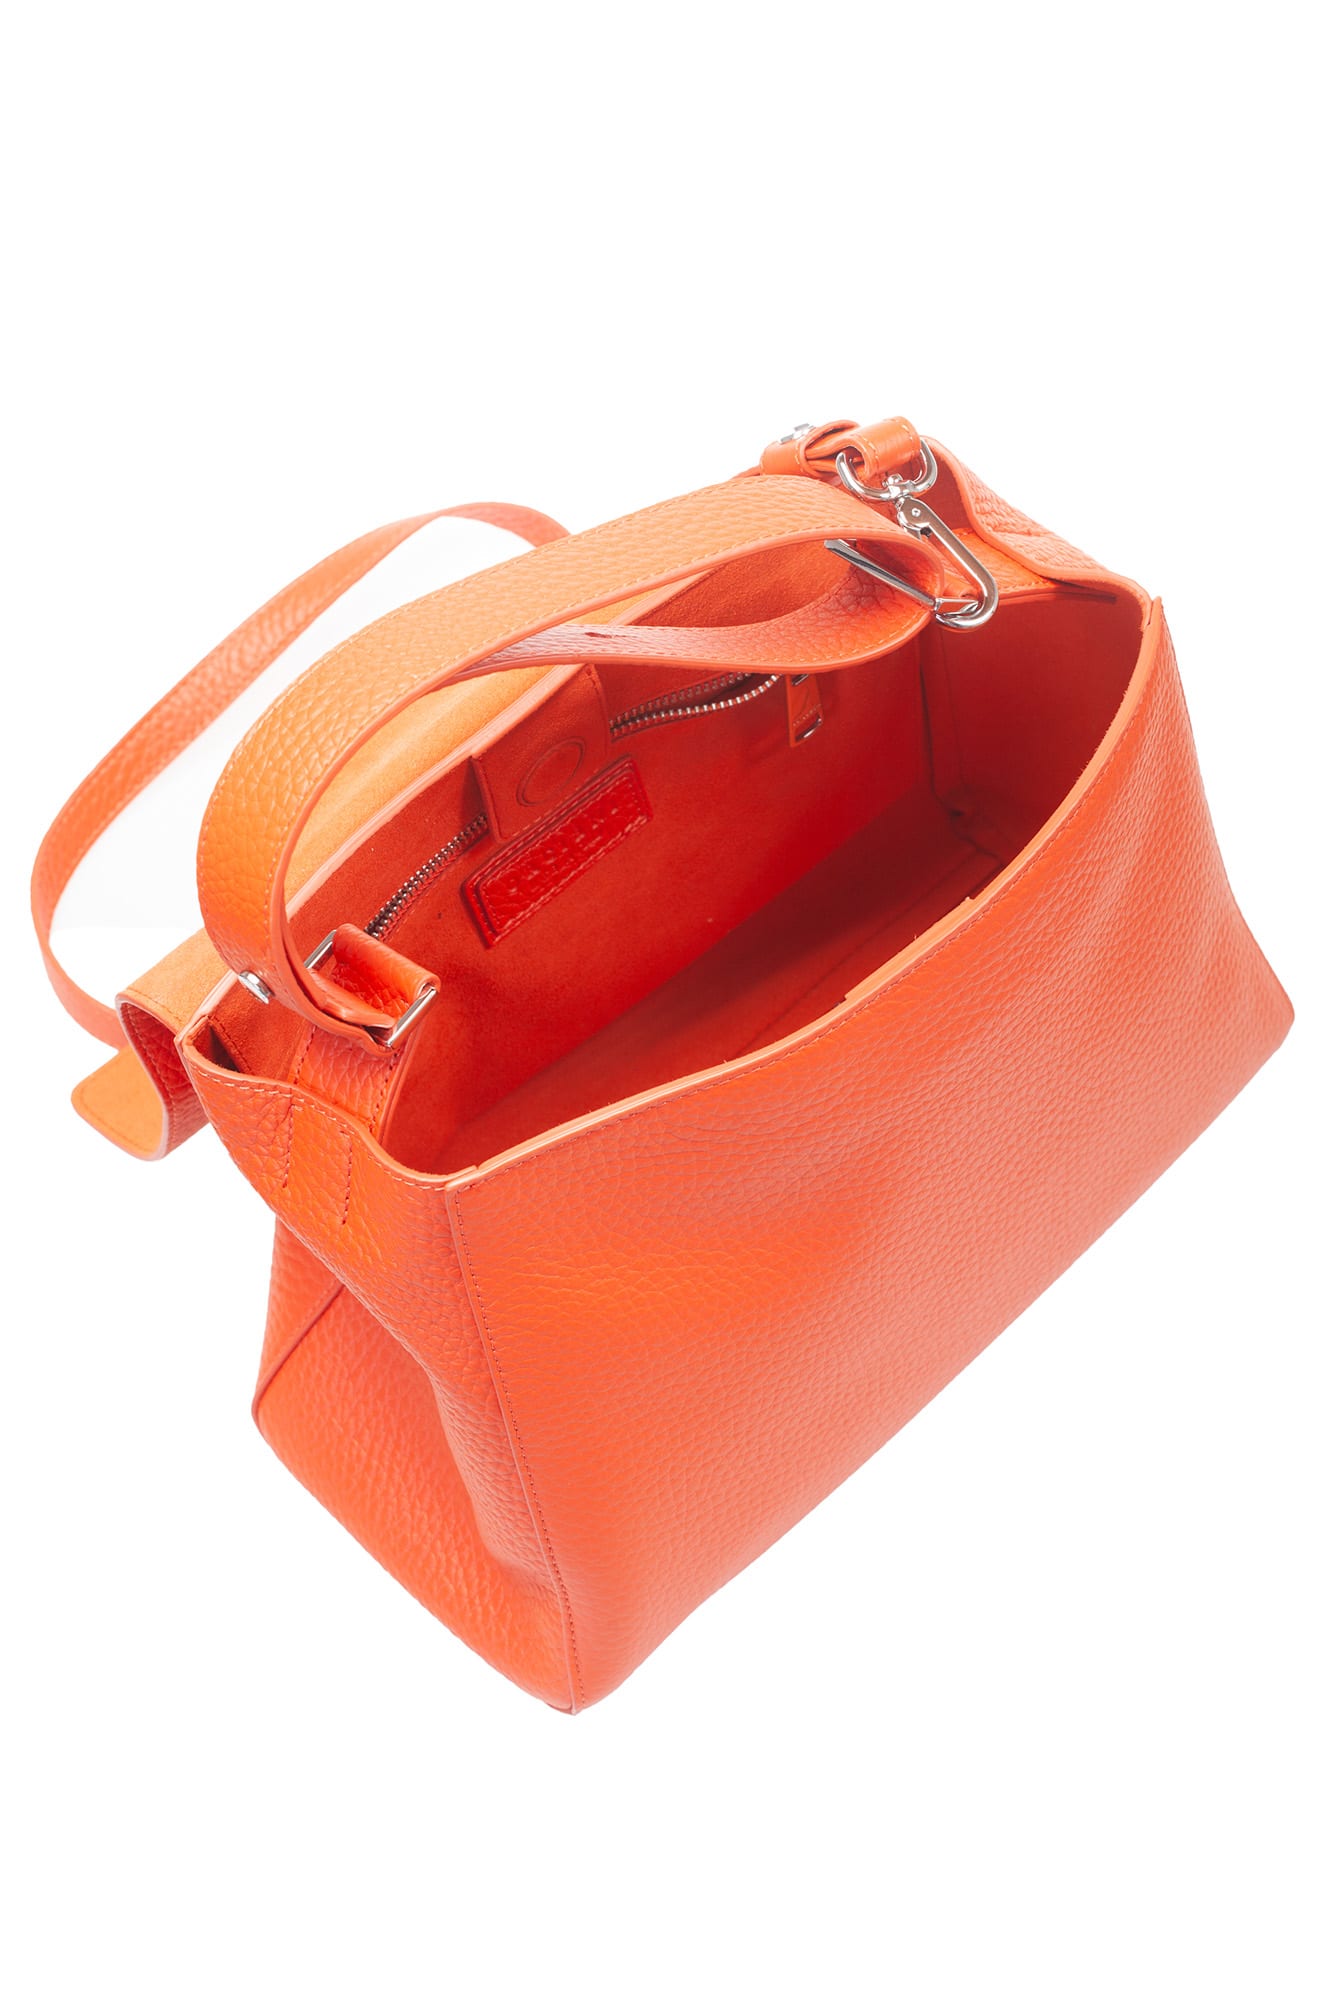 Shop Orciani Bags.. Orange